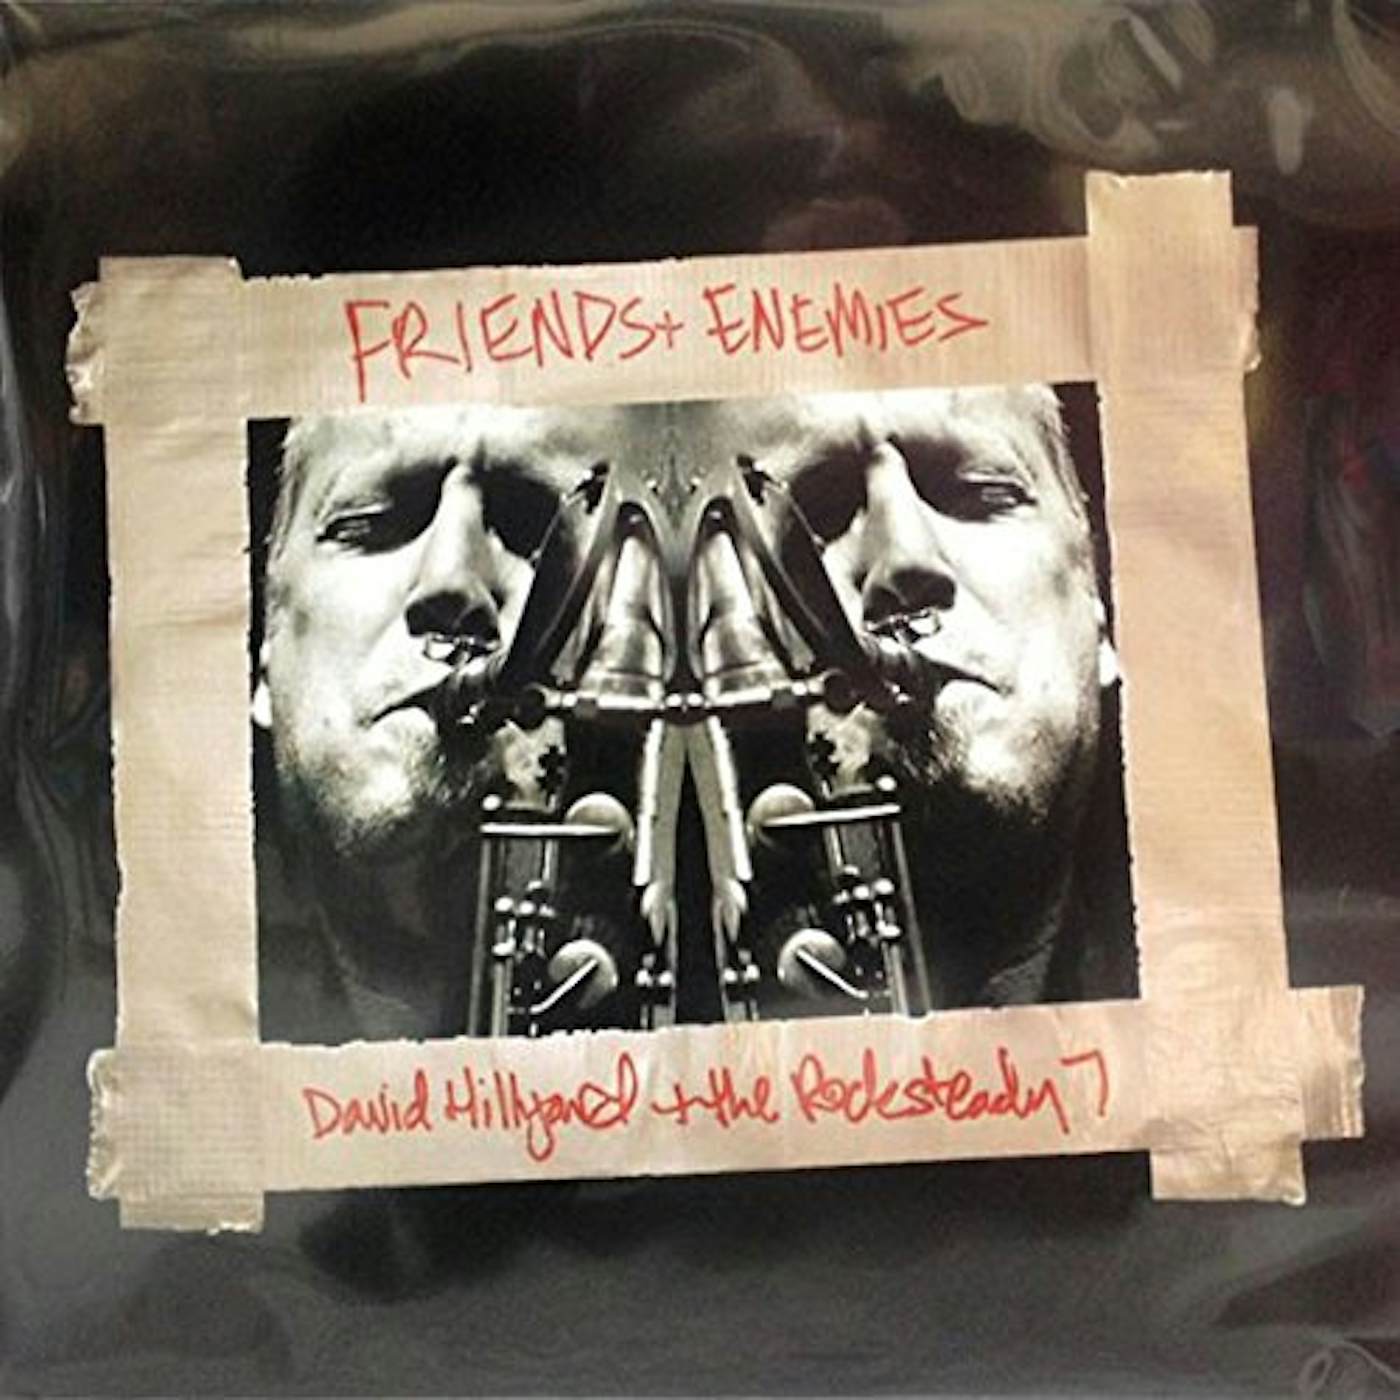 Dave Hillyard & Rocksteady 7 Friends & Enemies Vinyl Record